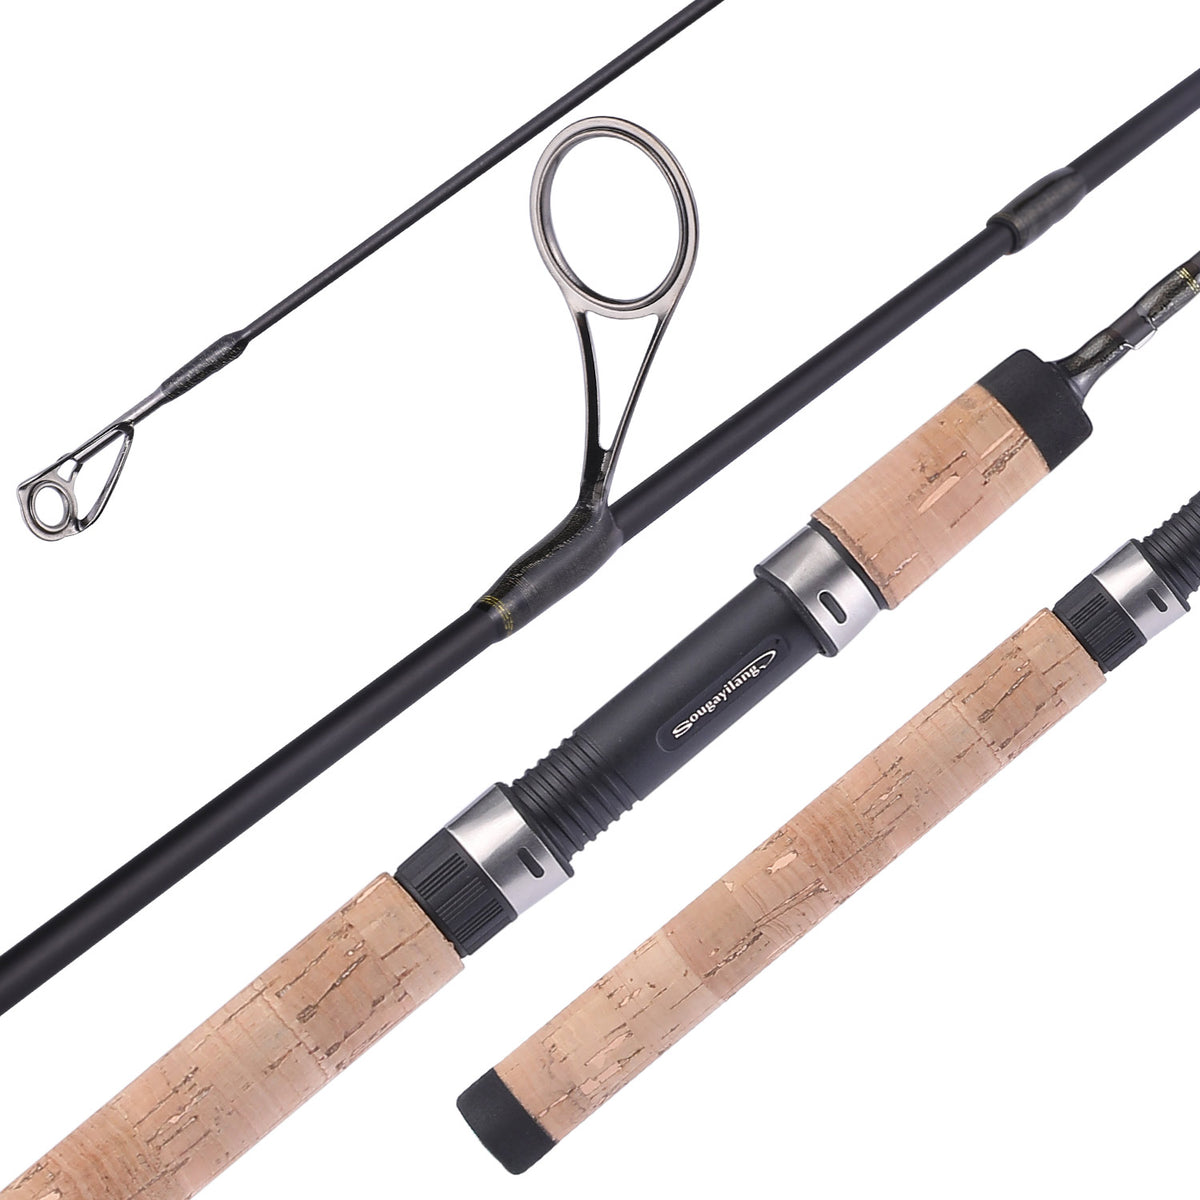 Beginner Fishing Rod, Ultralight 2PCS Portable Fishing Rod, For